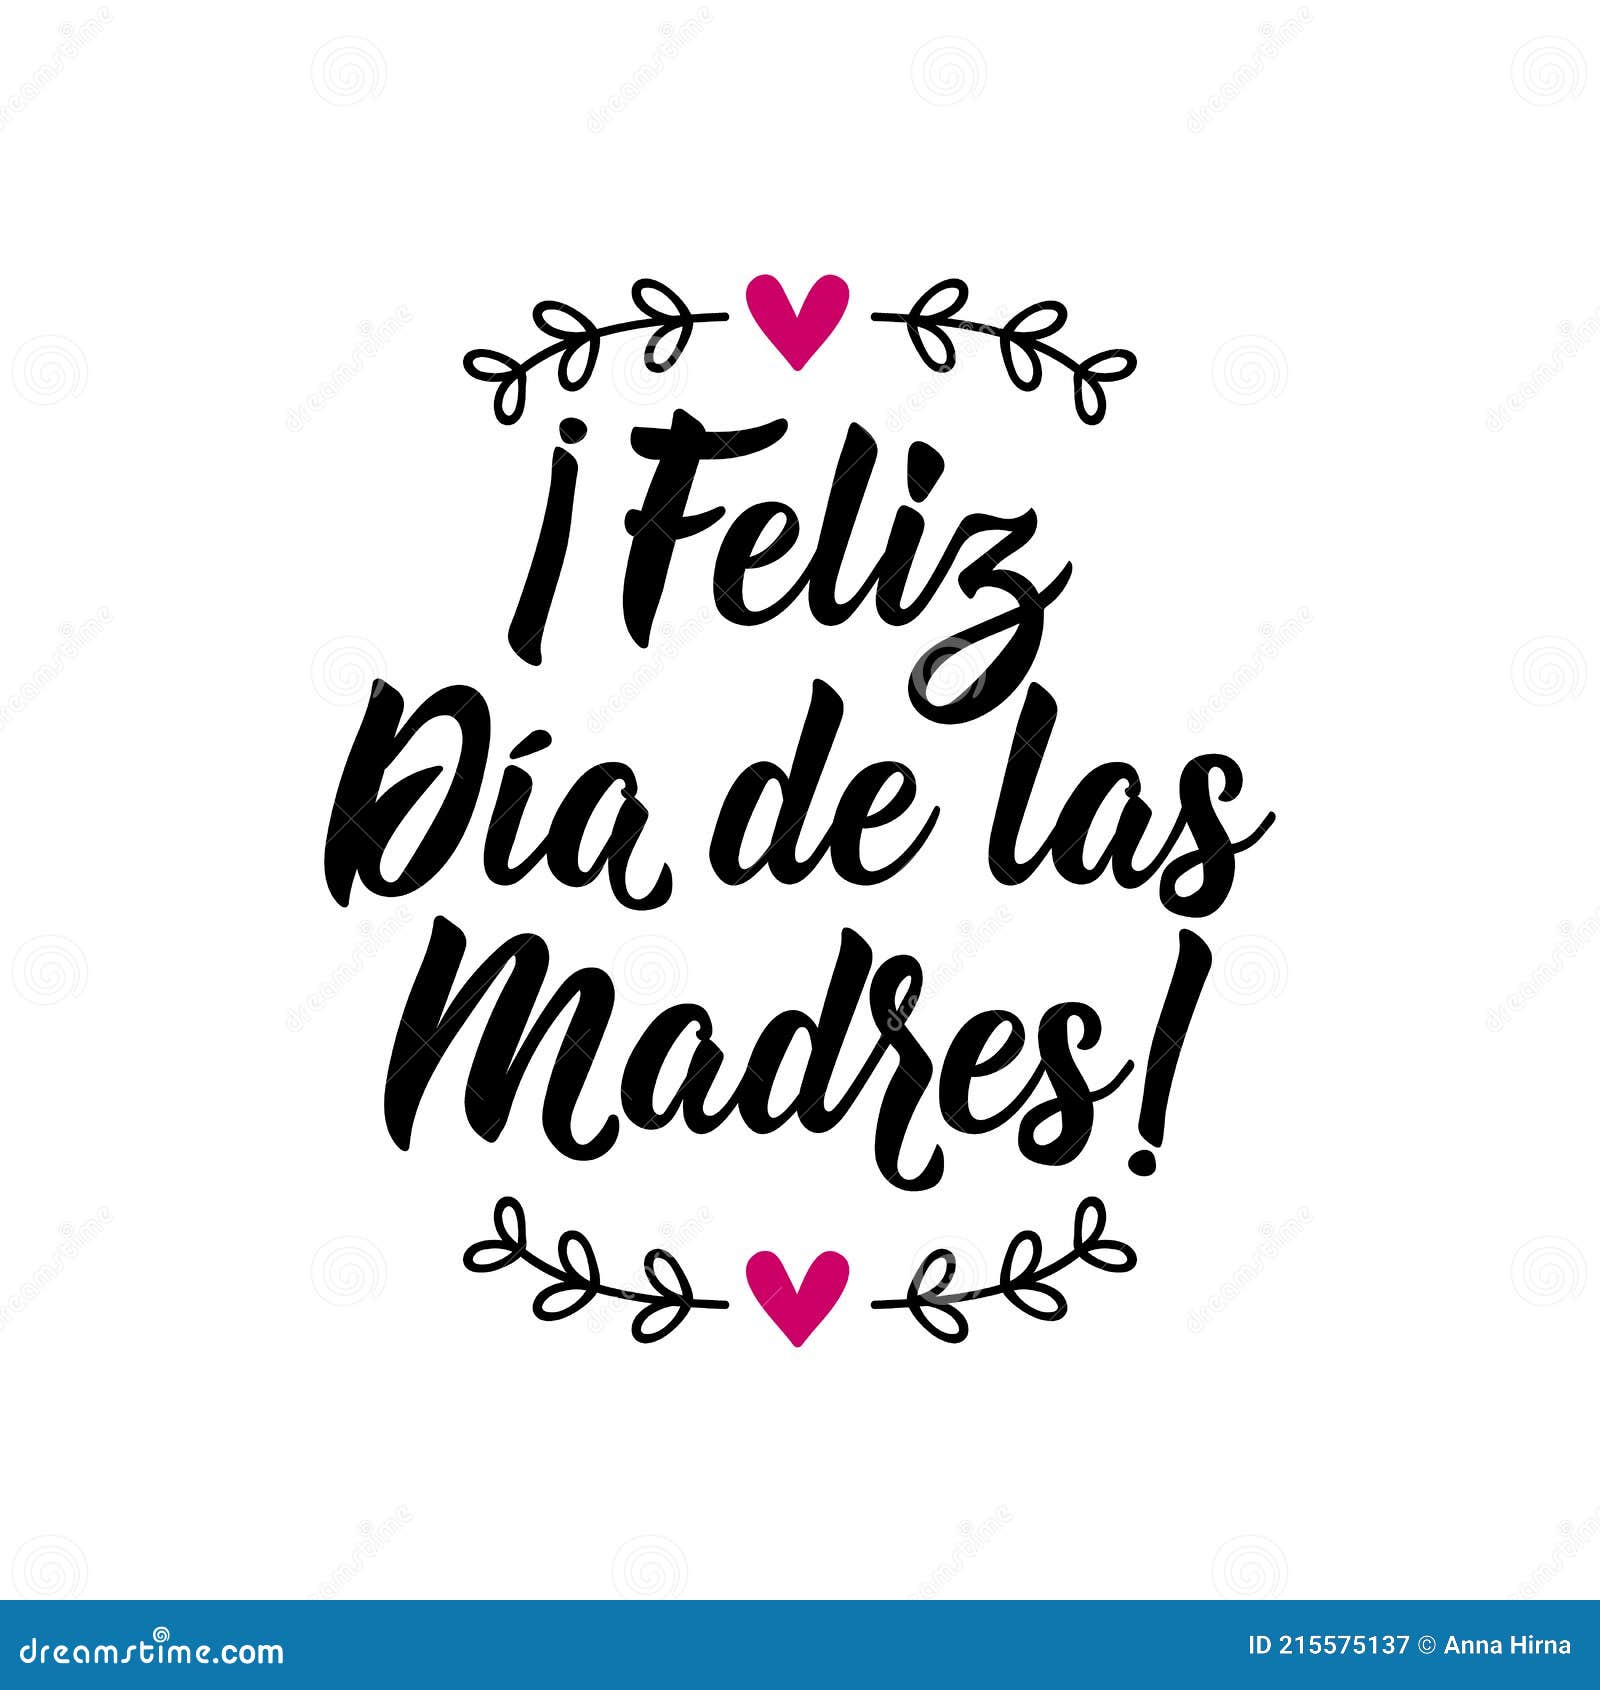 https://thumbs.dreamstime.com/z/happy-mother-s-day-spanish-lettering-ink-illustration-modern-brush-calligraphy-feliz-dia-de-la-madre-feliz-dia-de-la-madre-215575137.jpg